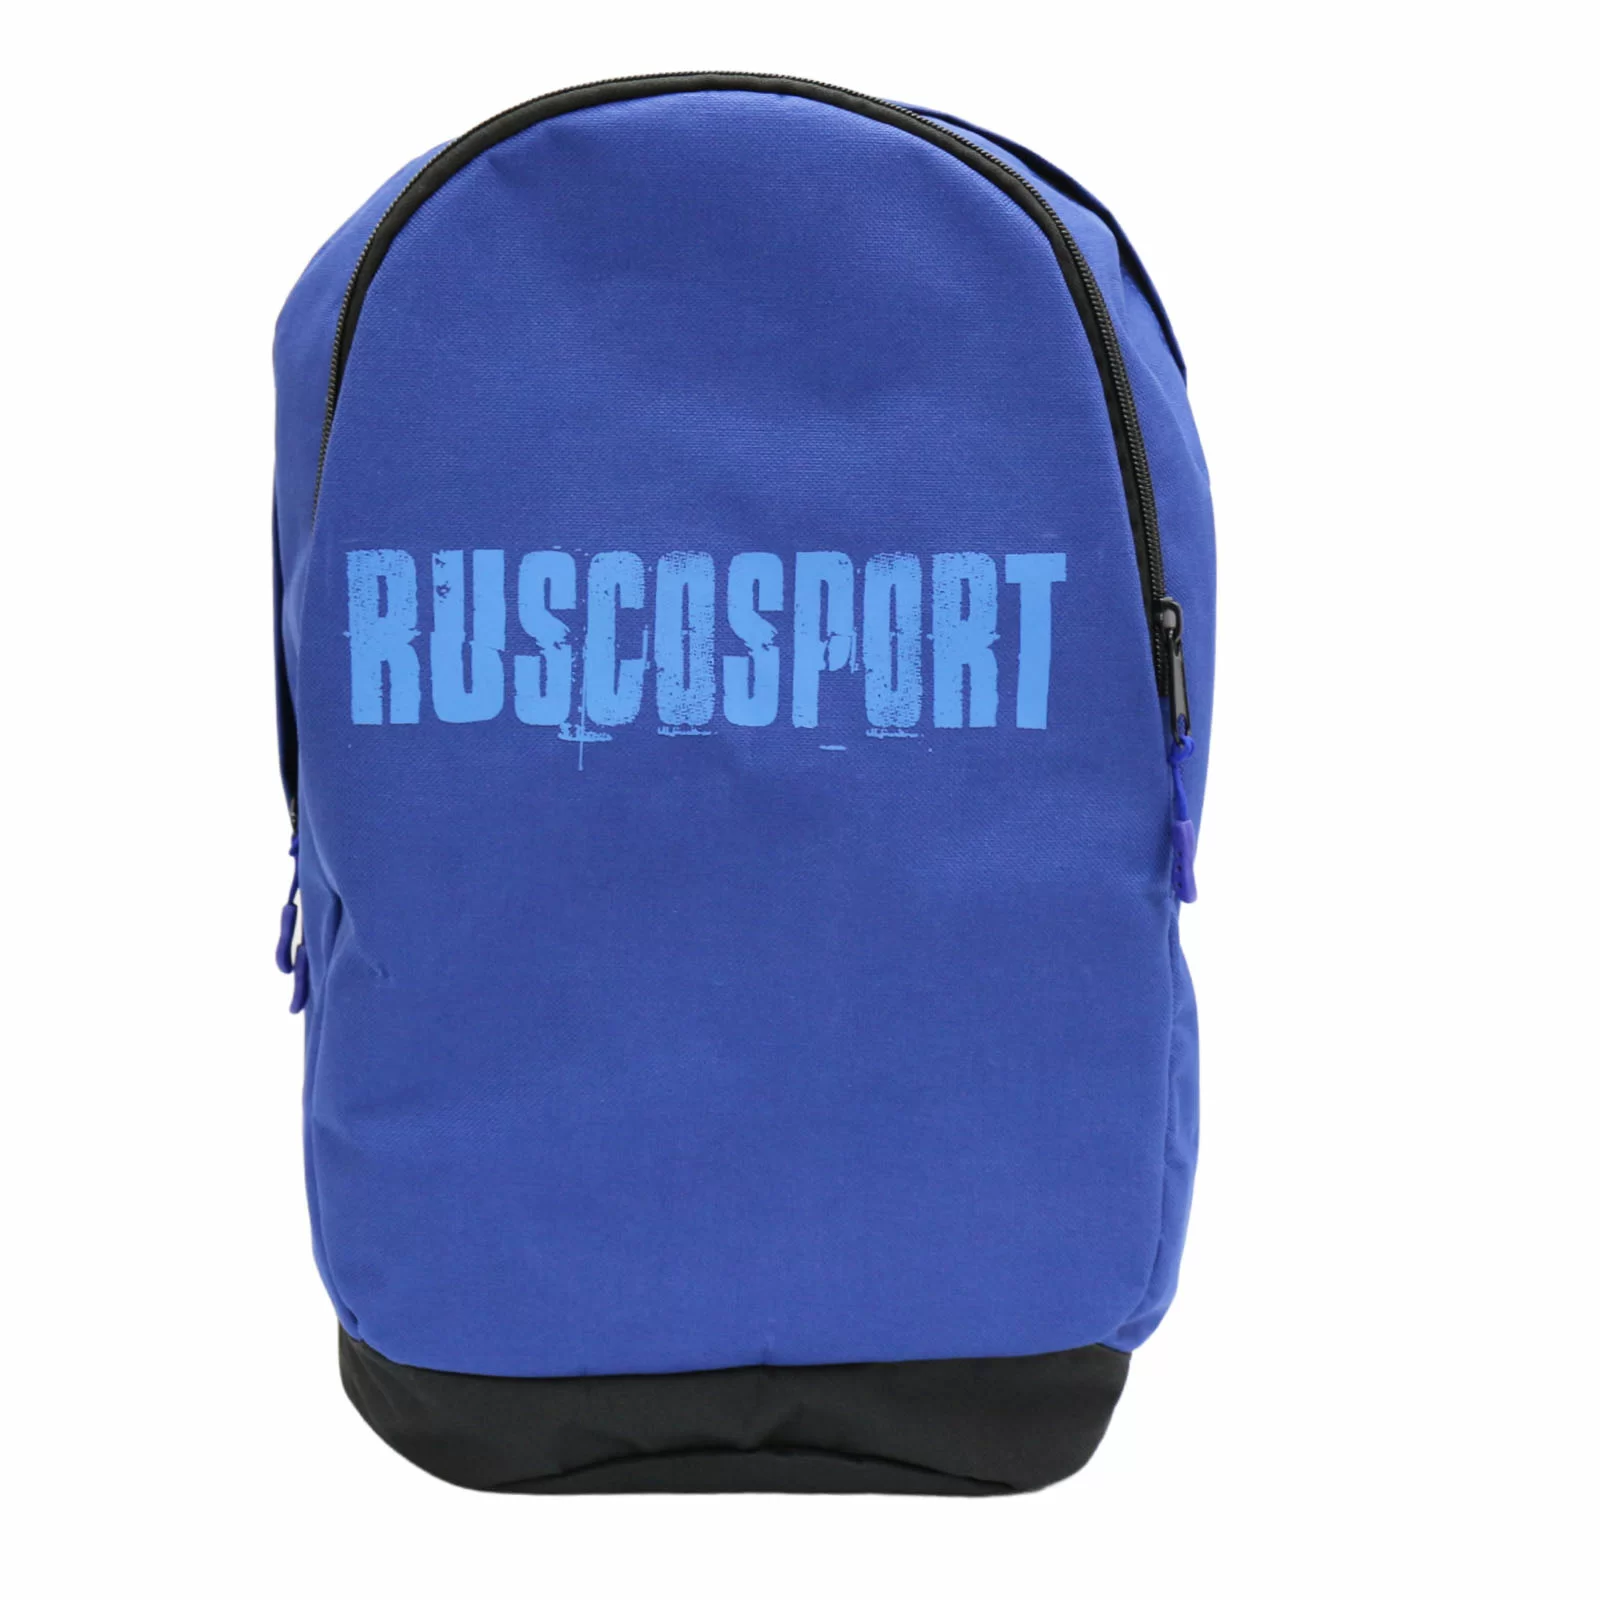 Реальное фото Рюкзак Rusco Sport Atlet dark blue от магазина СпортСЕ